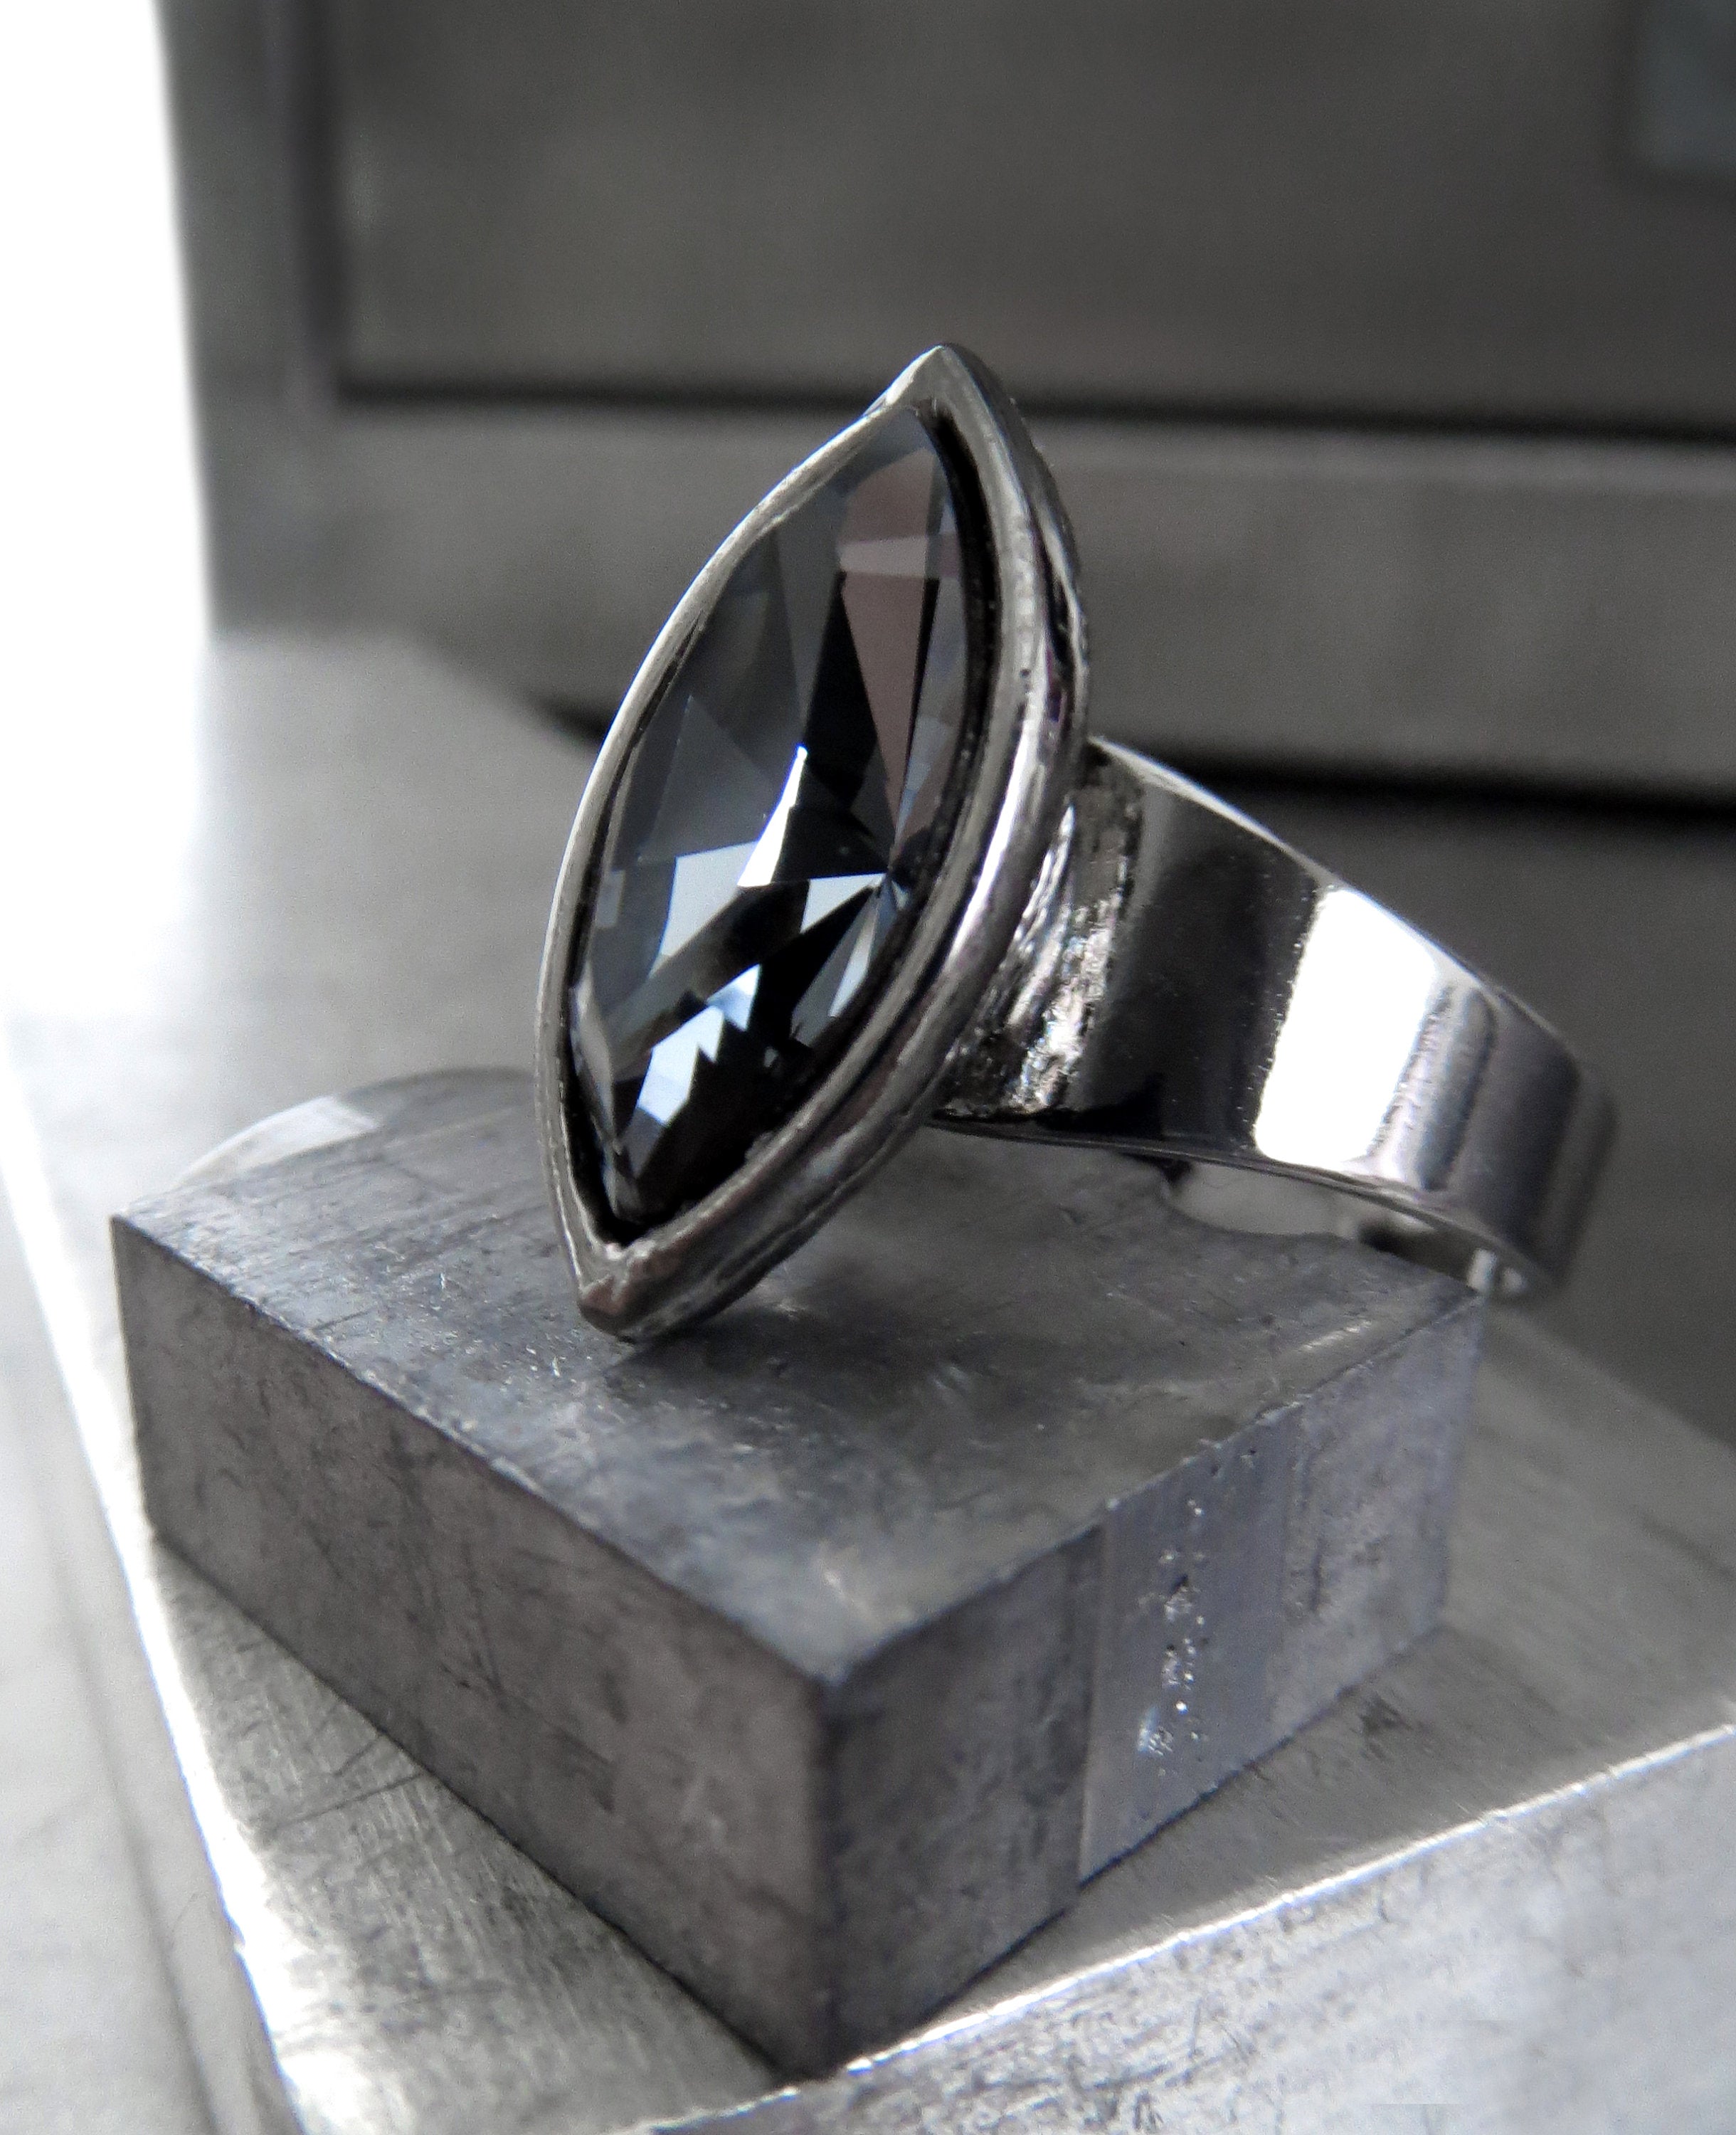 WICKED - Black Diamond Crystal Ring with Marquise Rhinestone